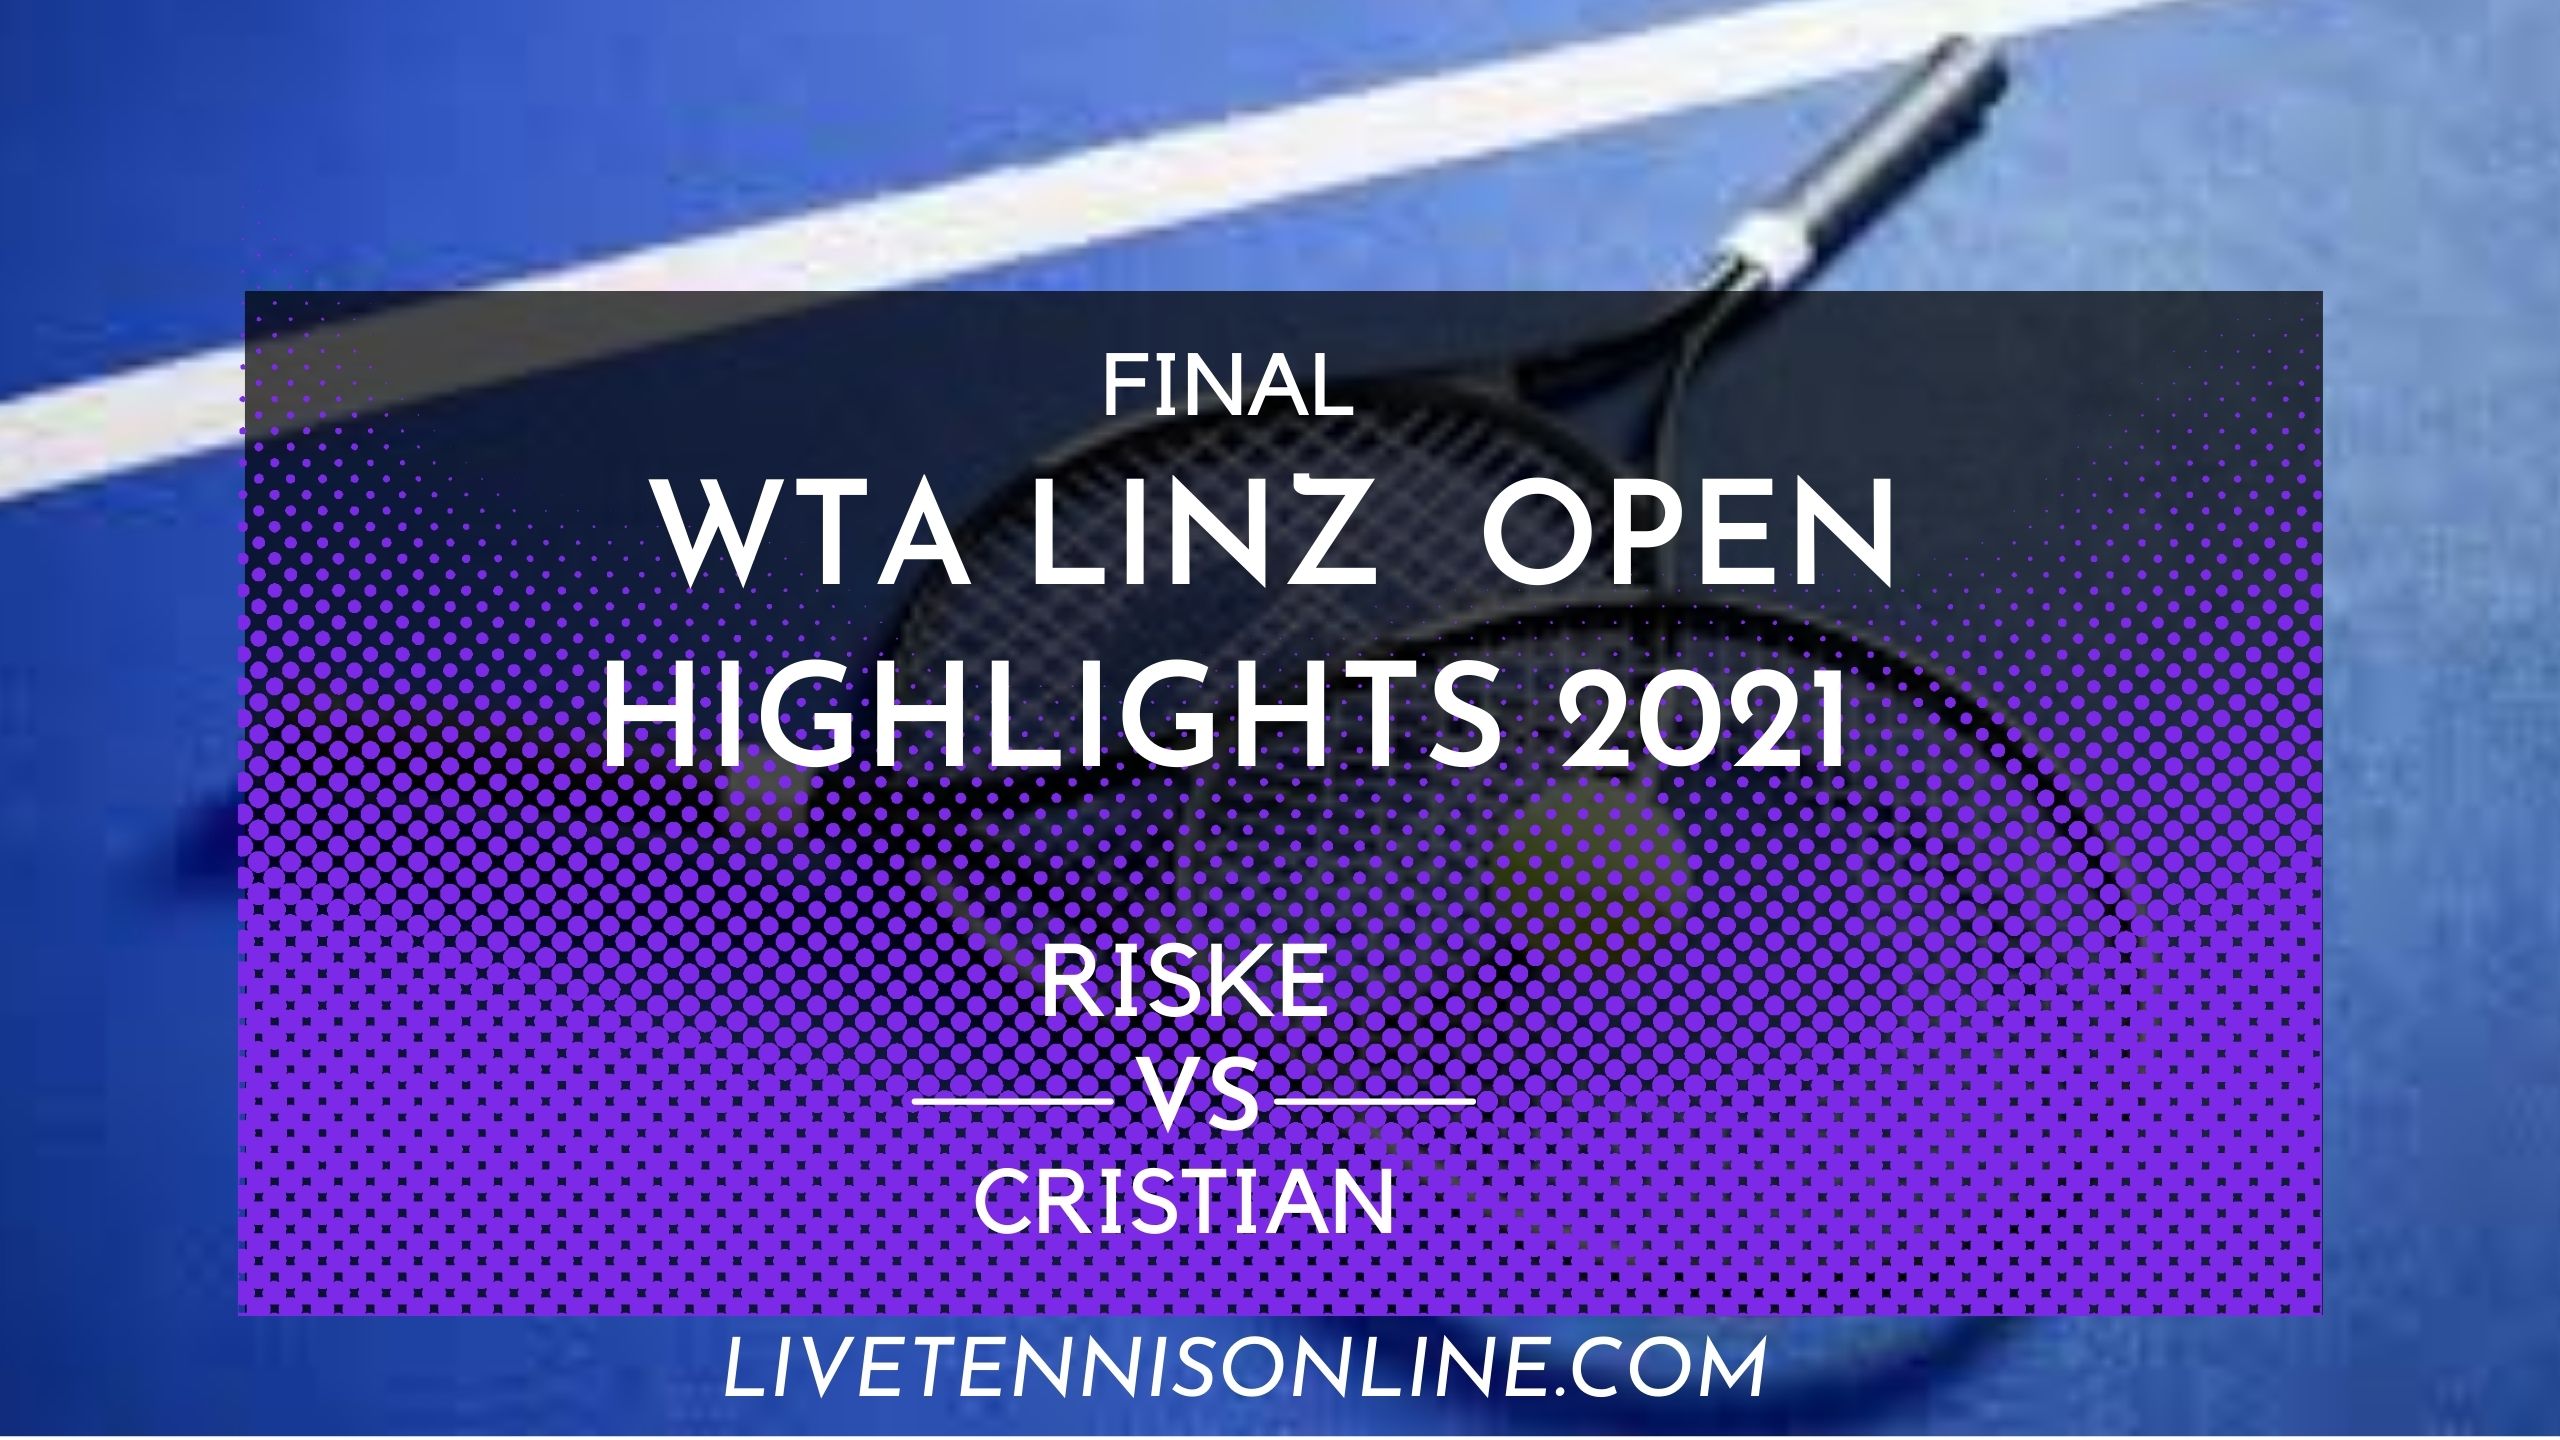 Riske Vs Cristian Final Highlights 2021 Linz Open